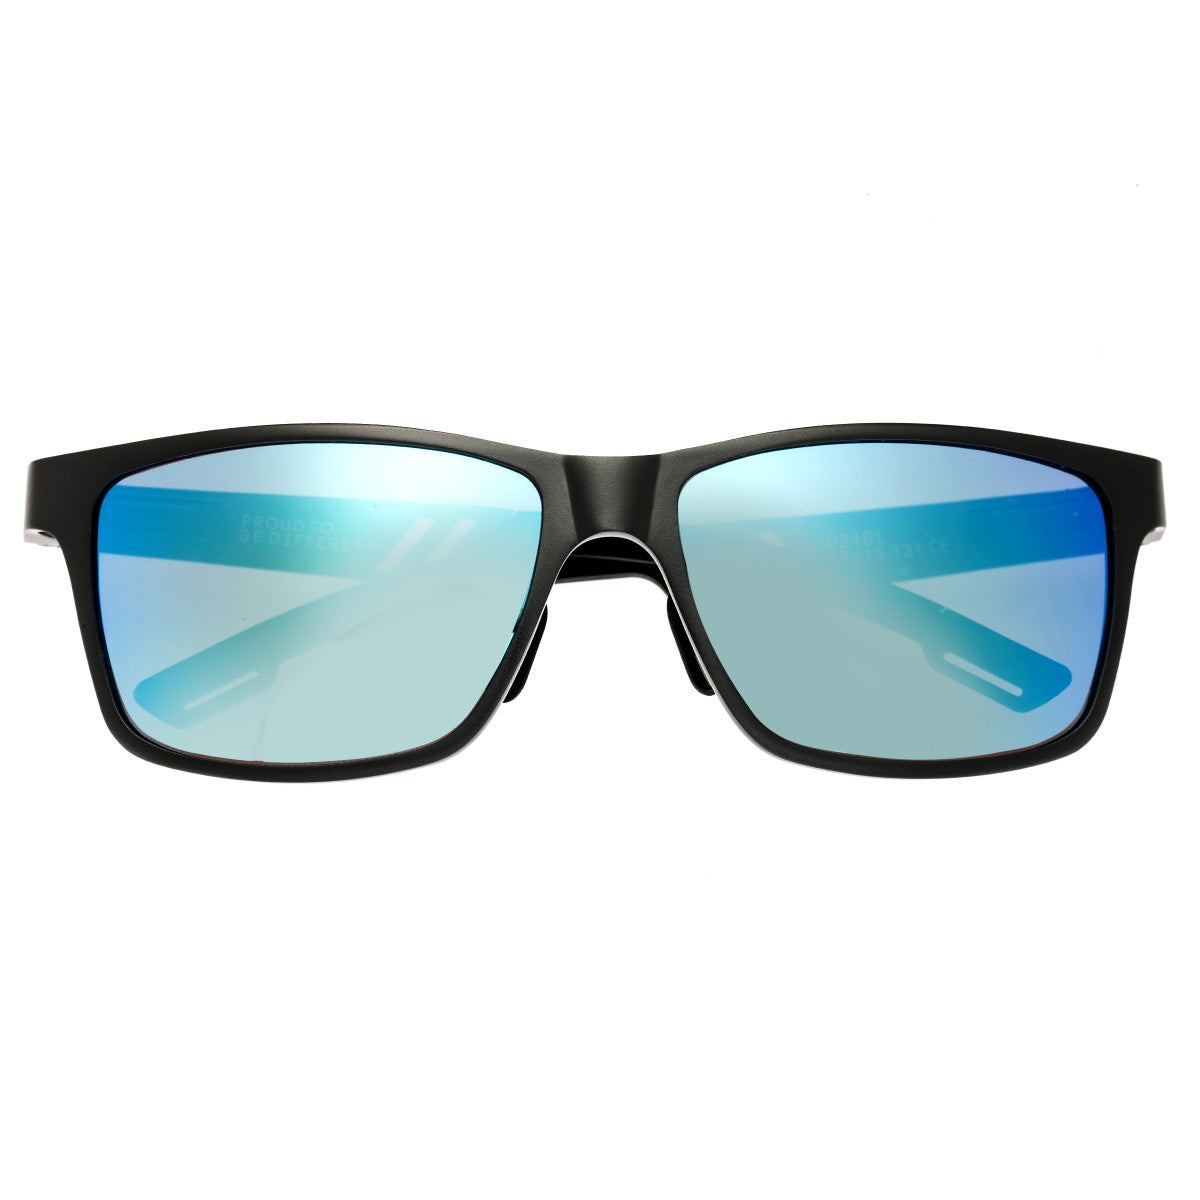 Breed Pyxis Titanium Polarized Sunglasses - Gunmetal/Blue - BSG024BL